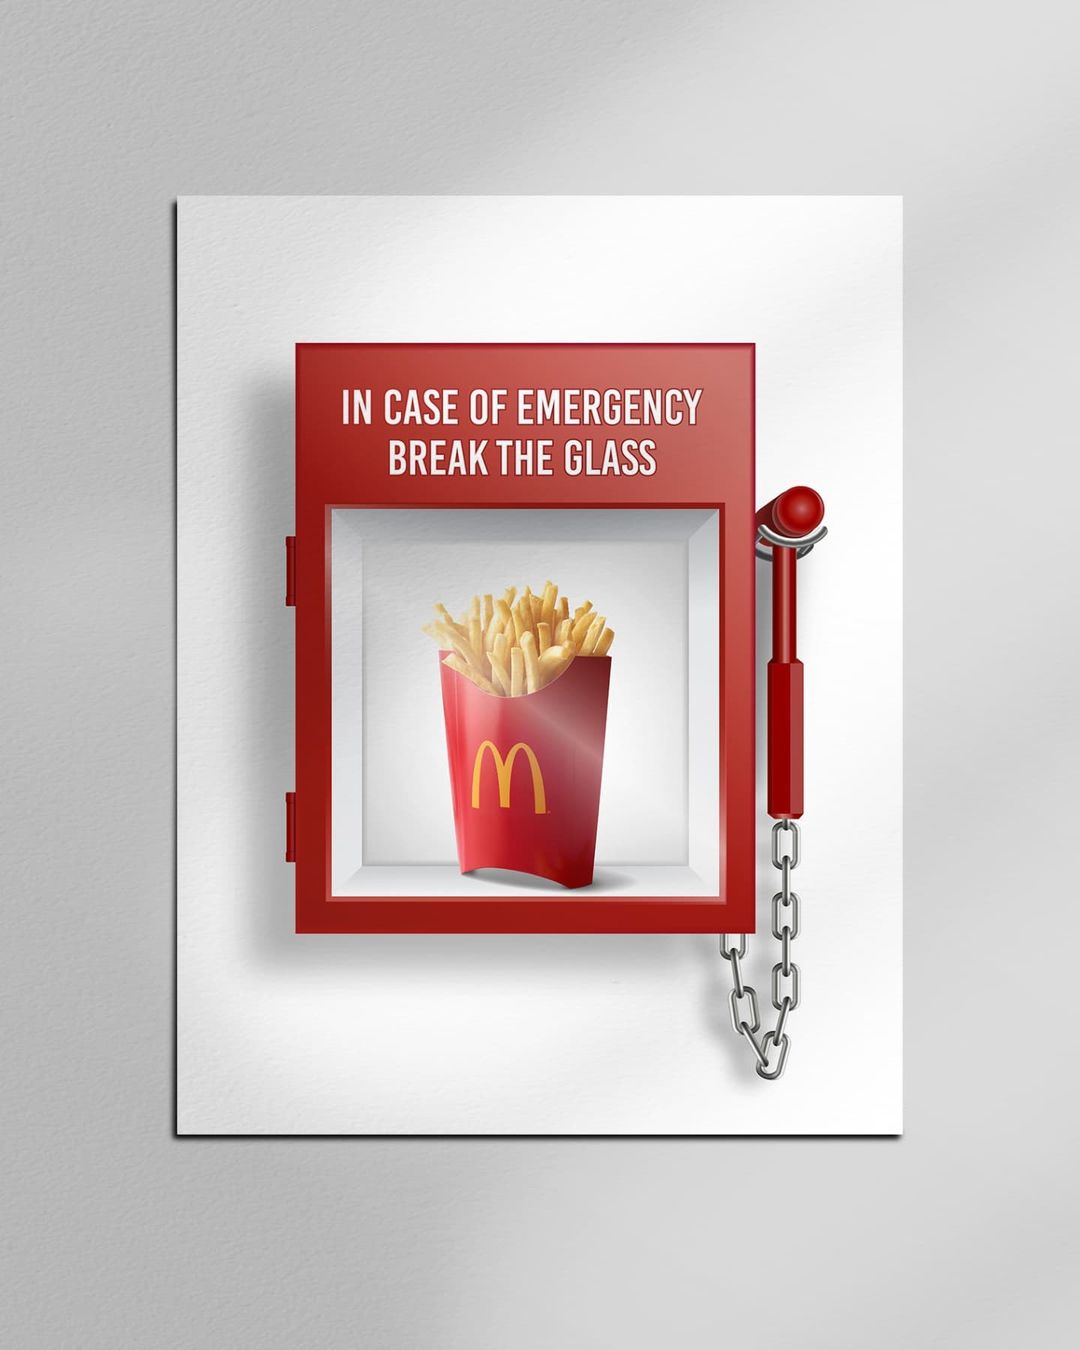 McDonalds fries - emergency fries